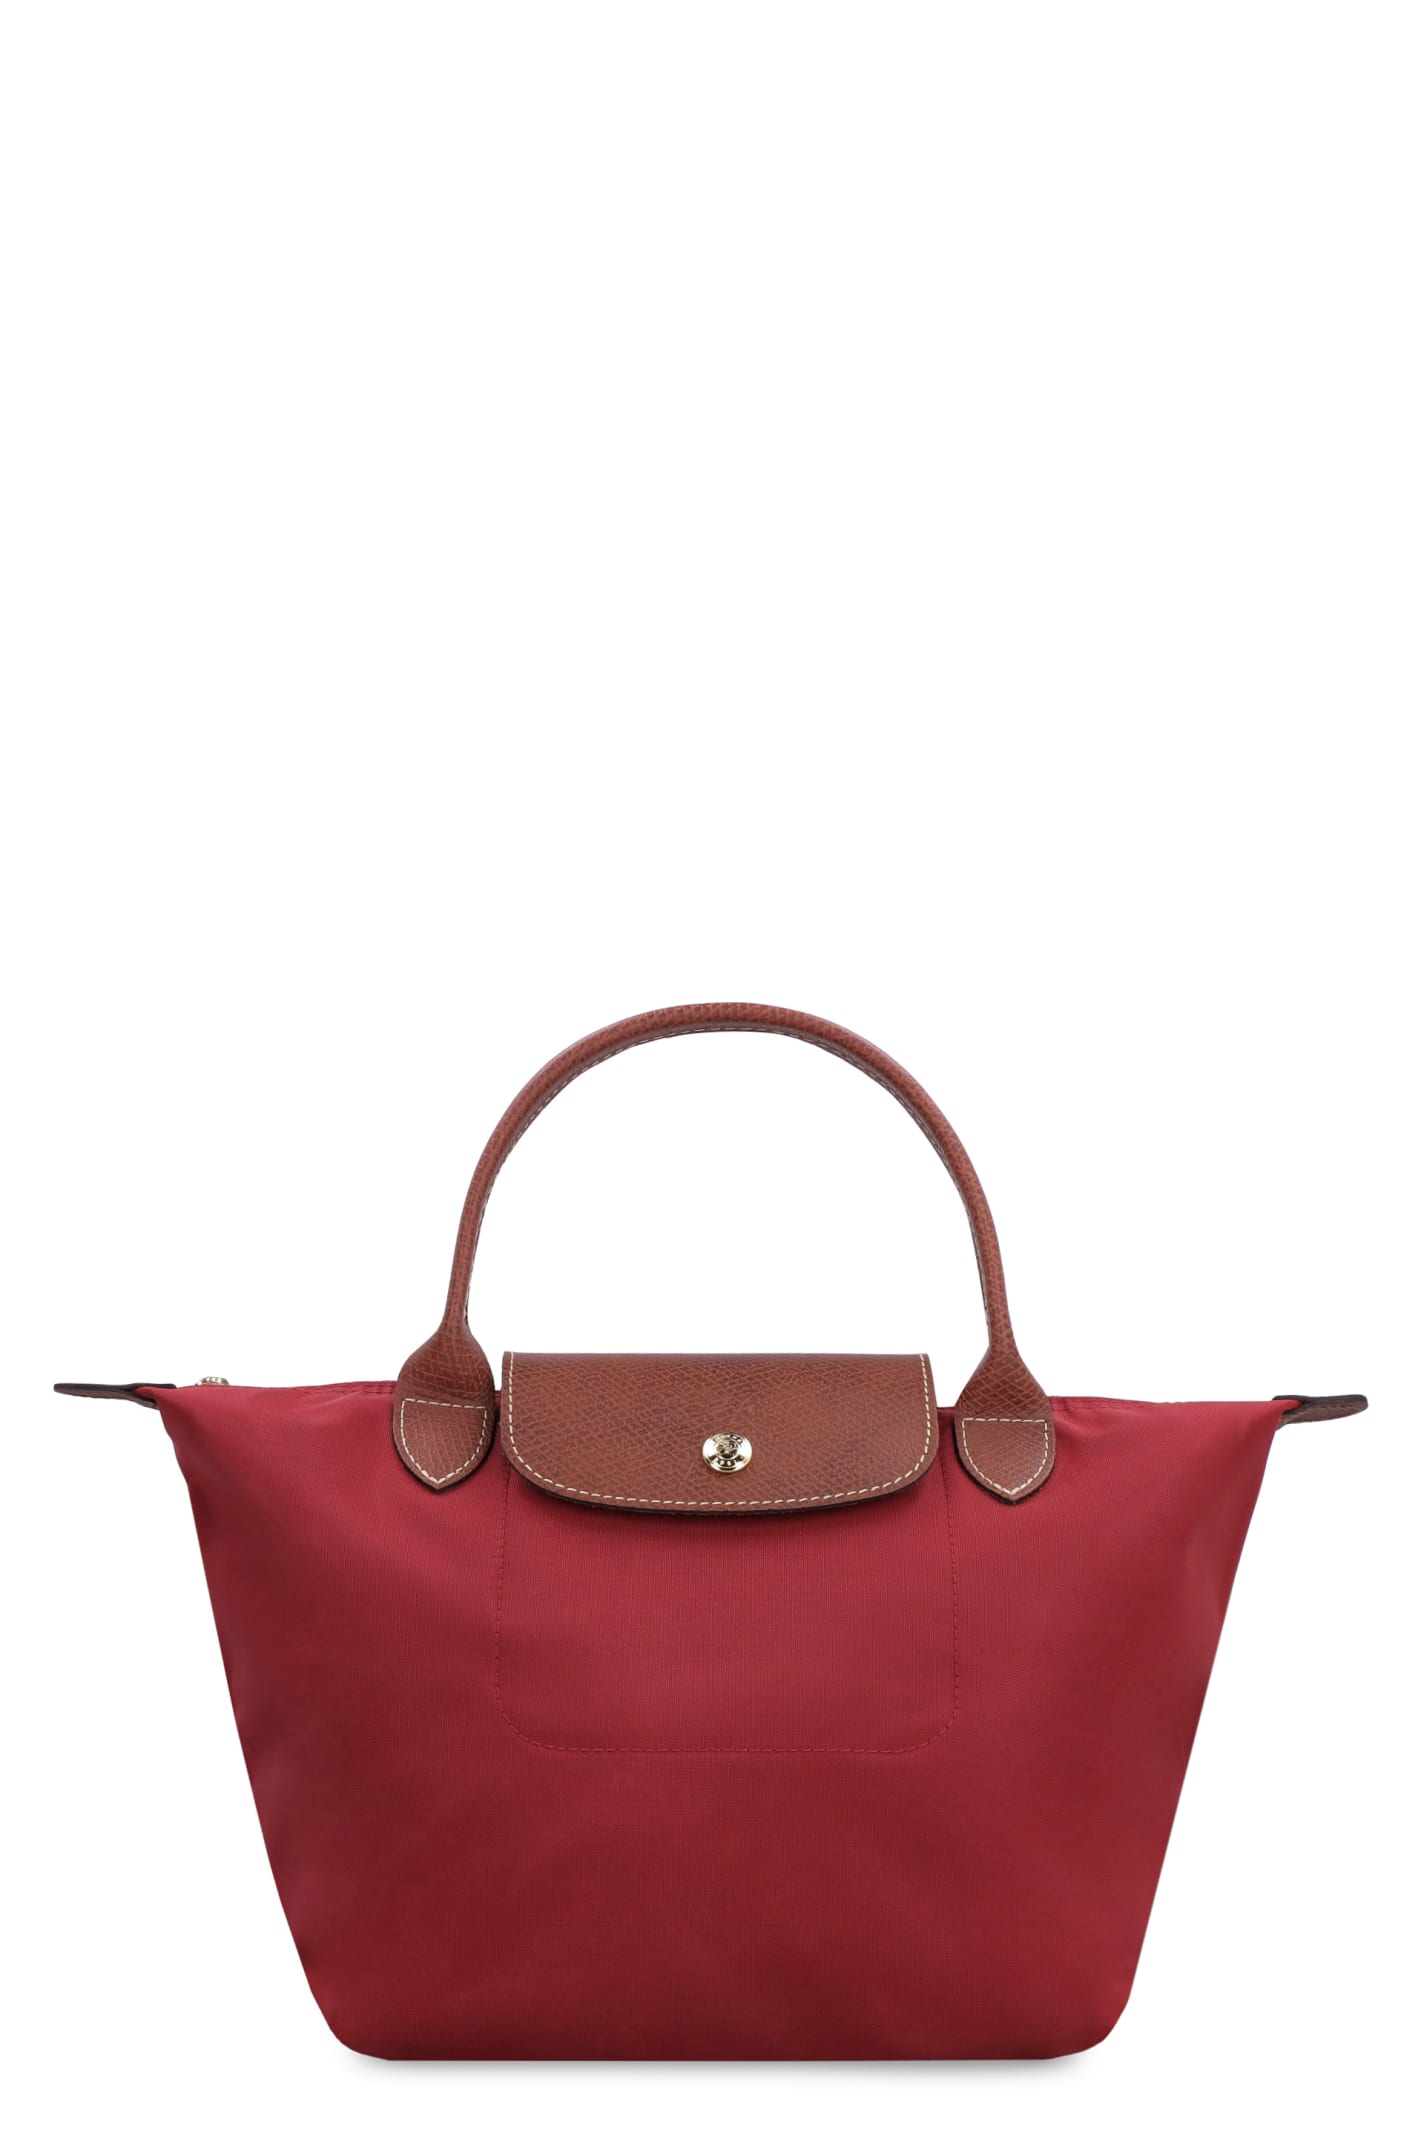 Longchamp Le Pliage Original Handbag